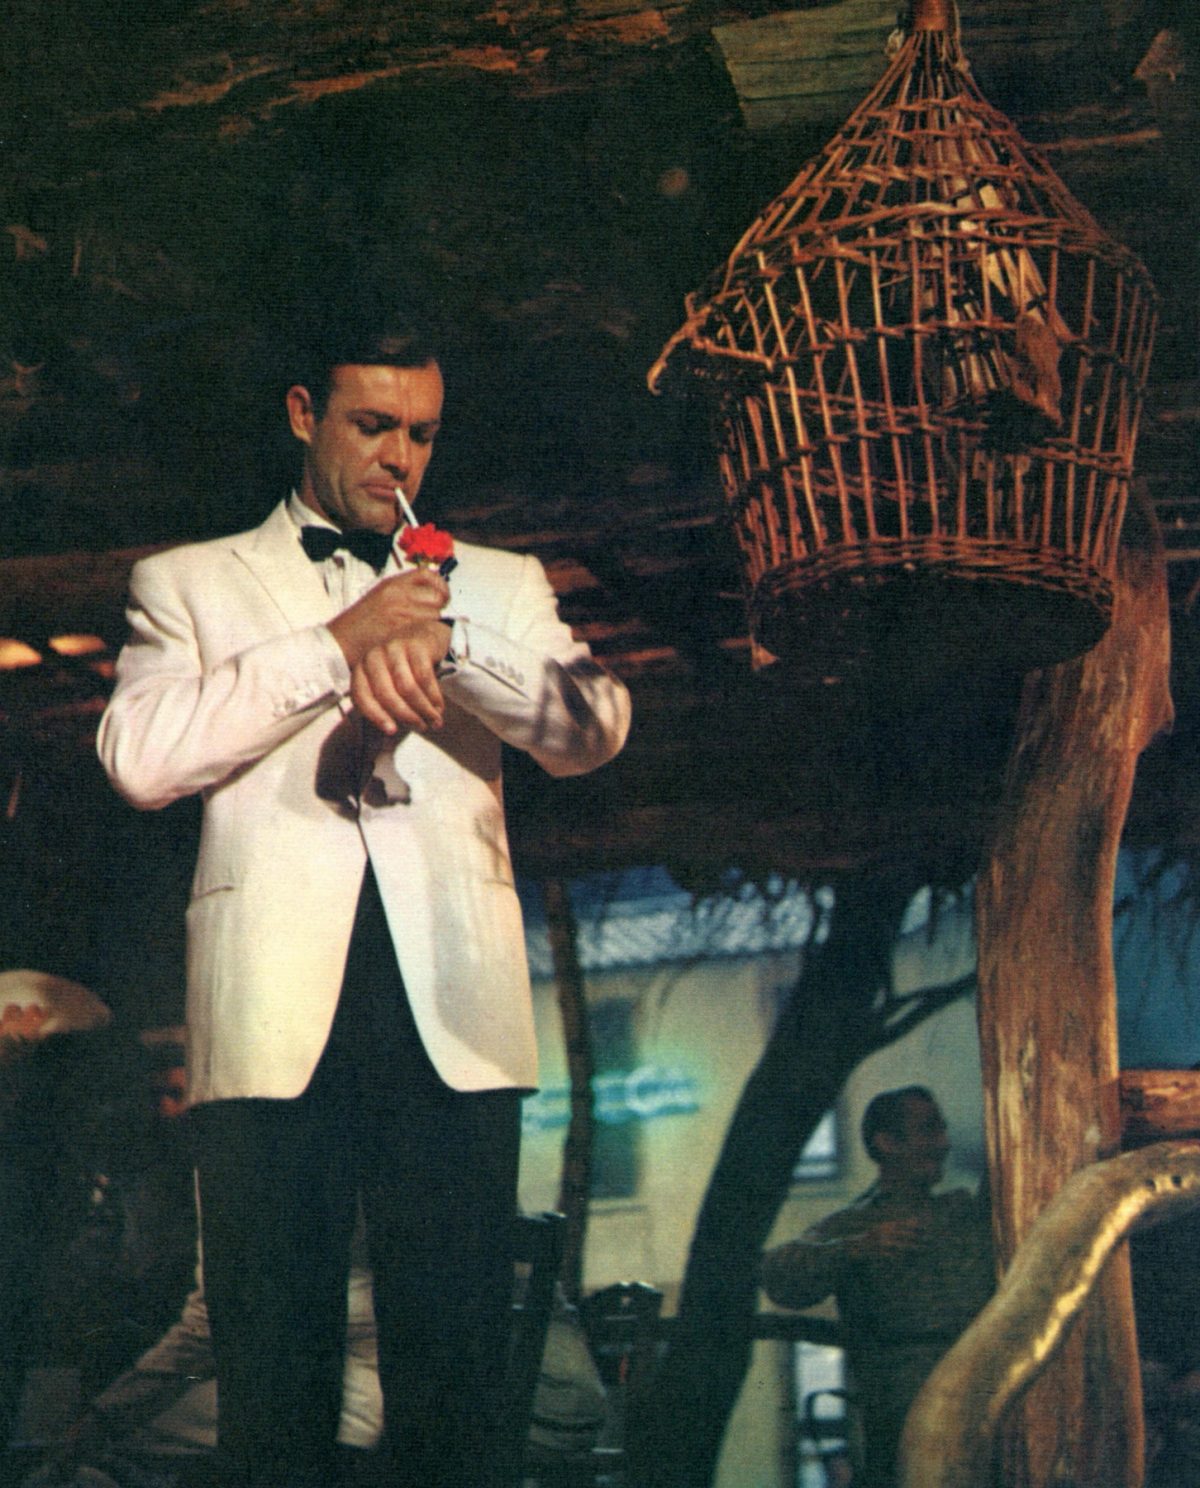 James Bond with buttonhole